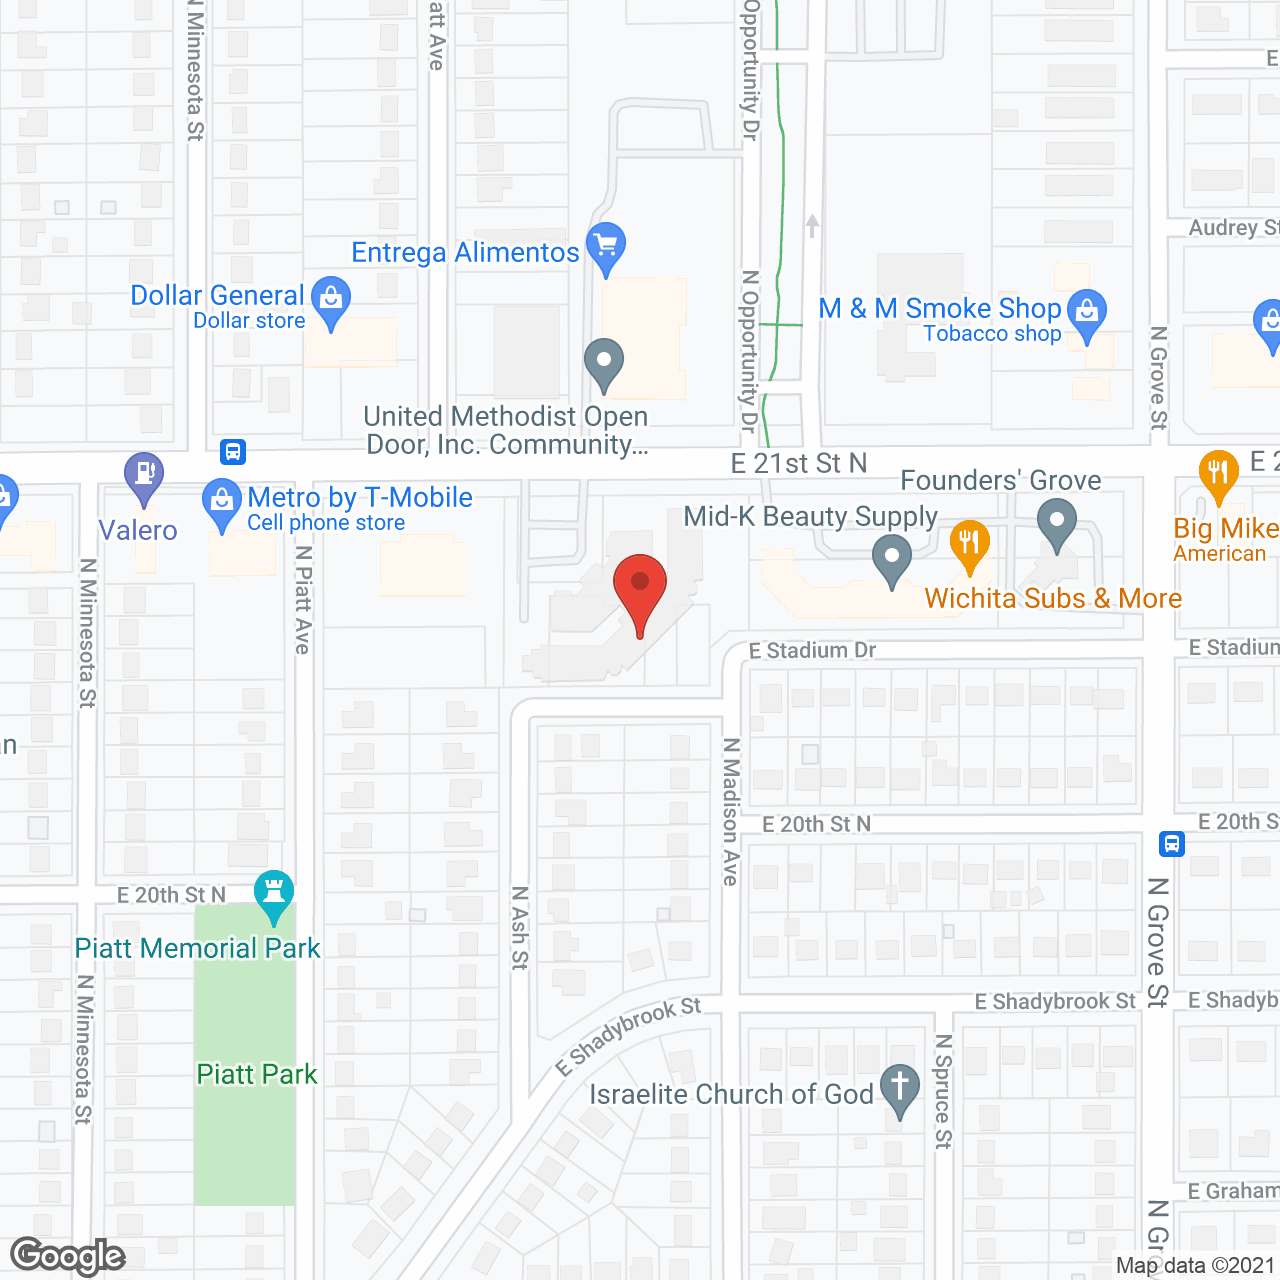 Plaza North Senior Residences in google map